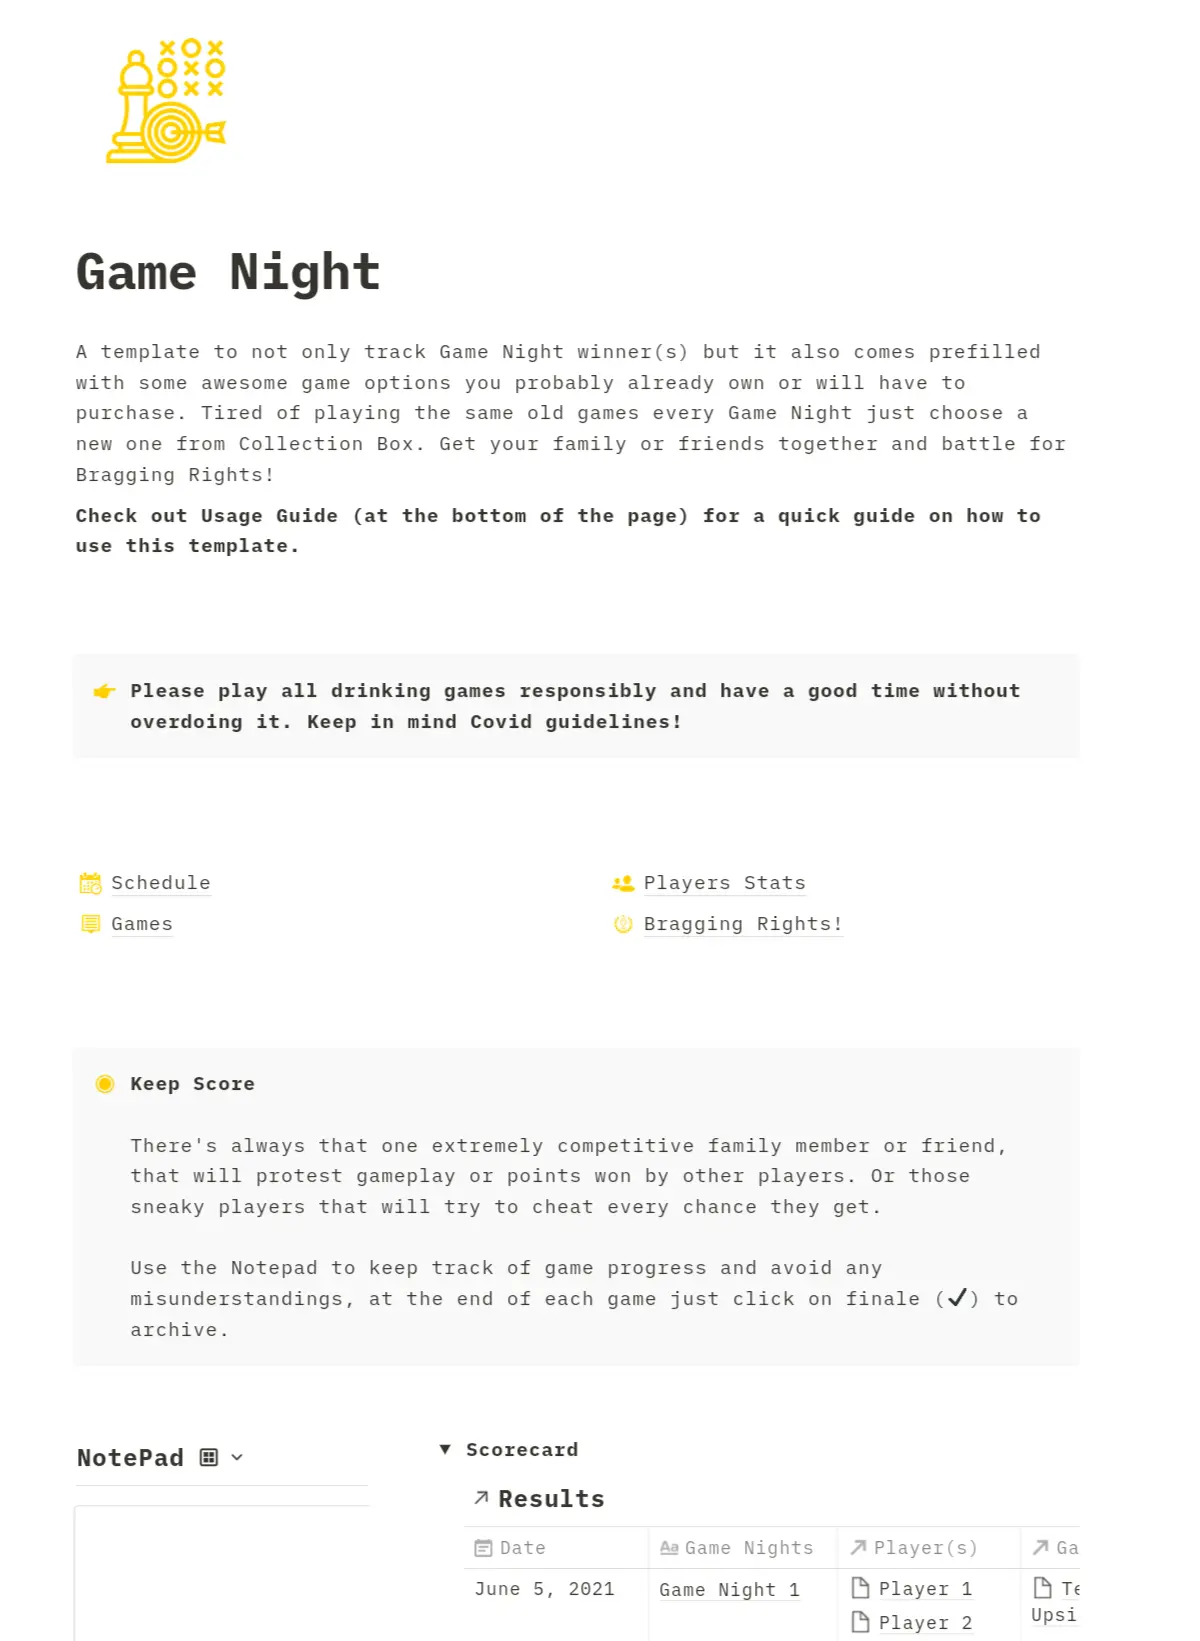 Notion Game Night Tracker image